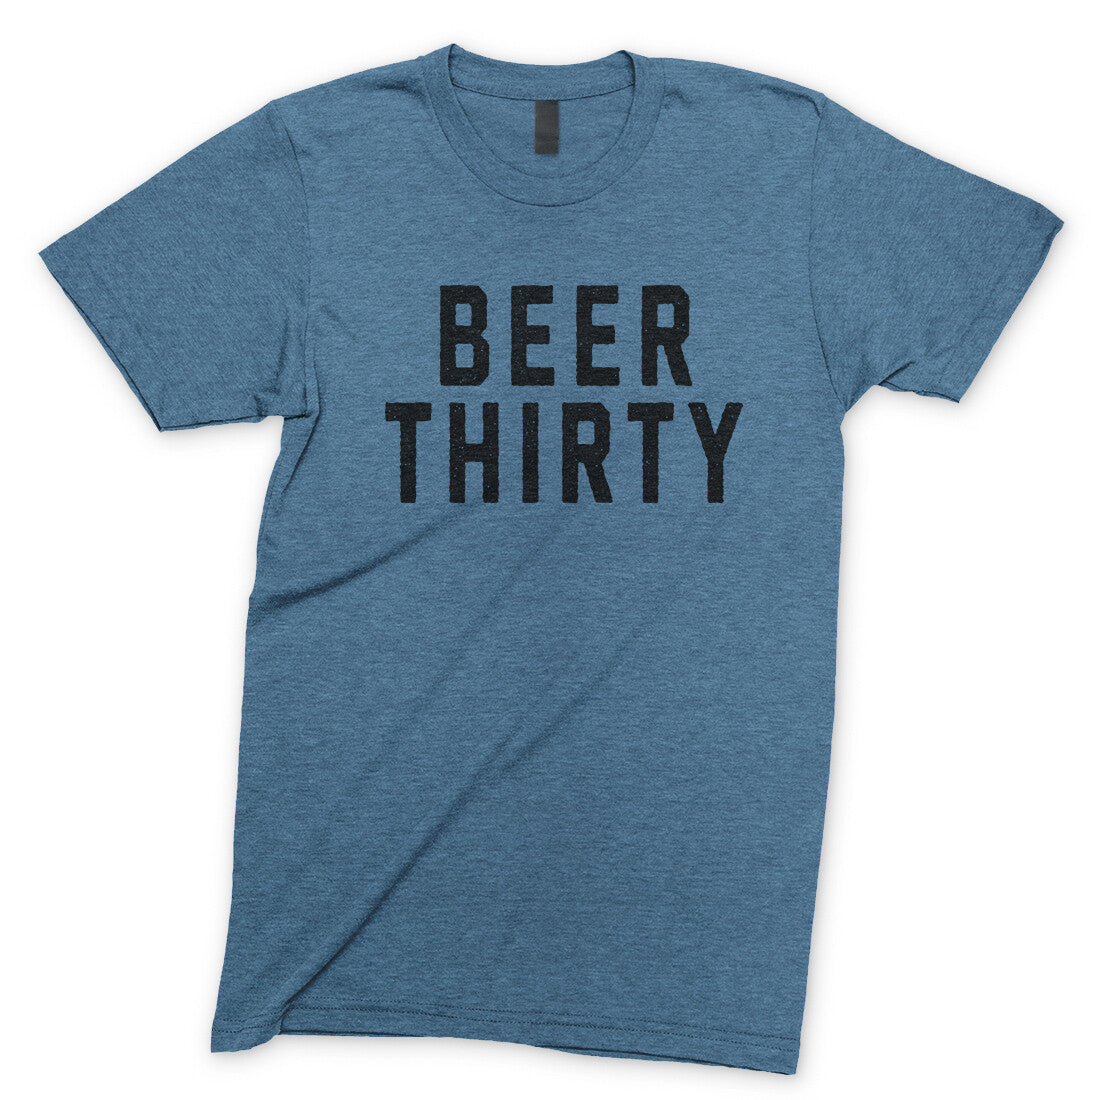 Beer Thirty in Heather Indigo Color